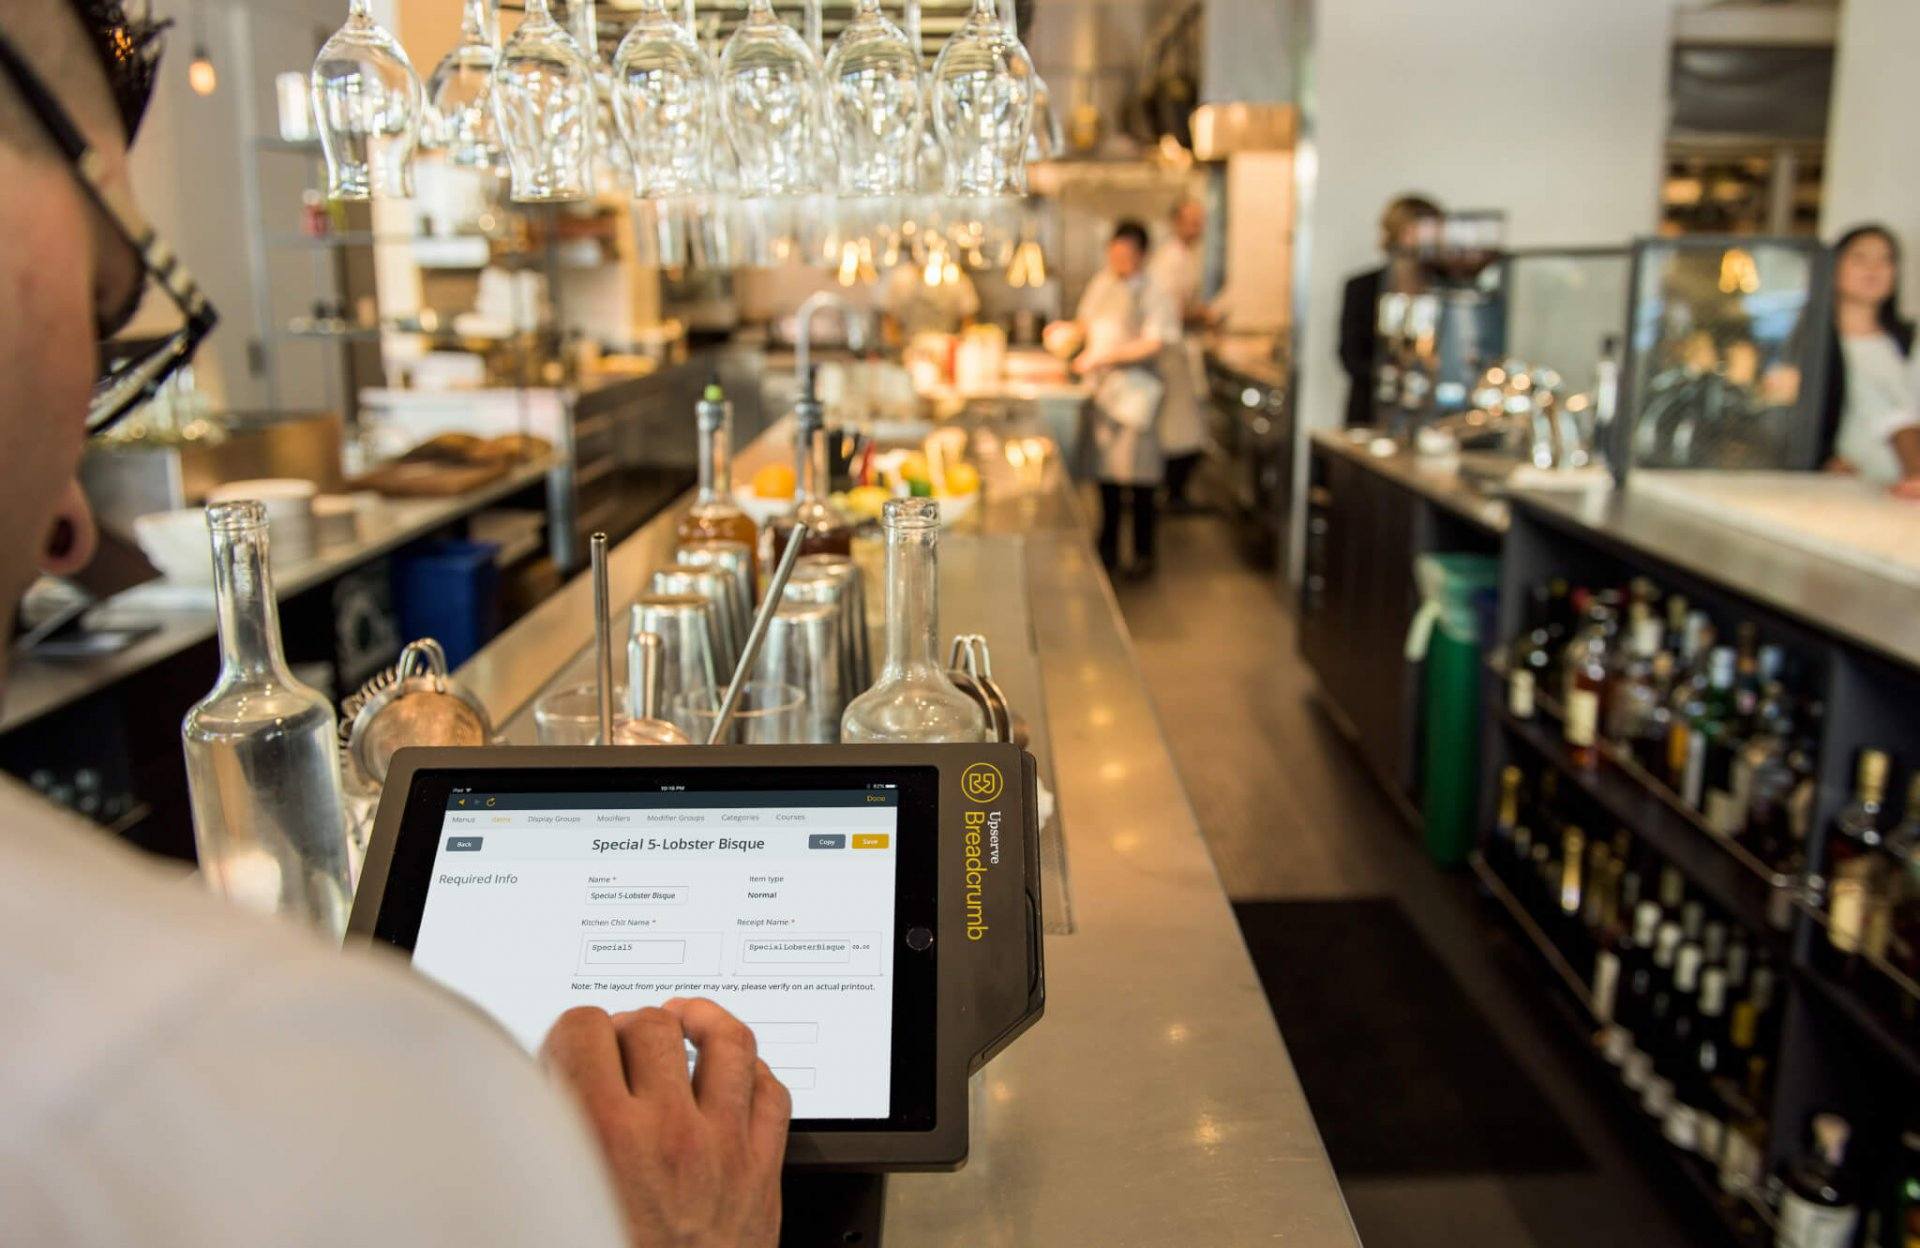 Restaurant management technology company Upserve Raises New Financing